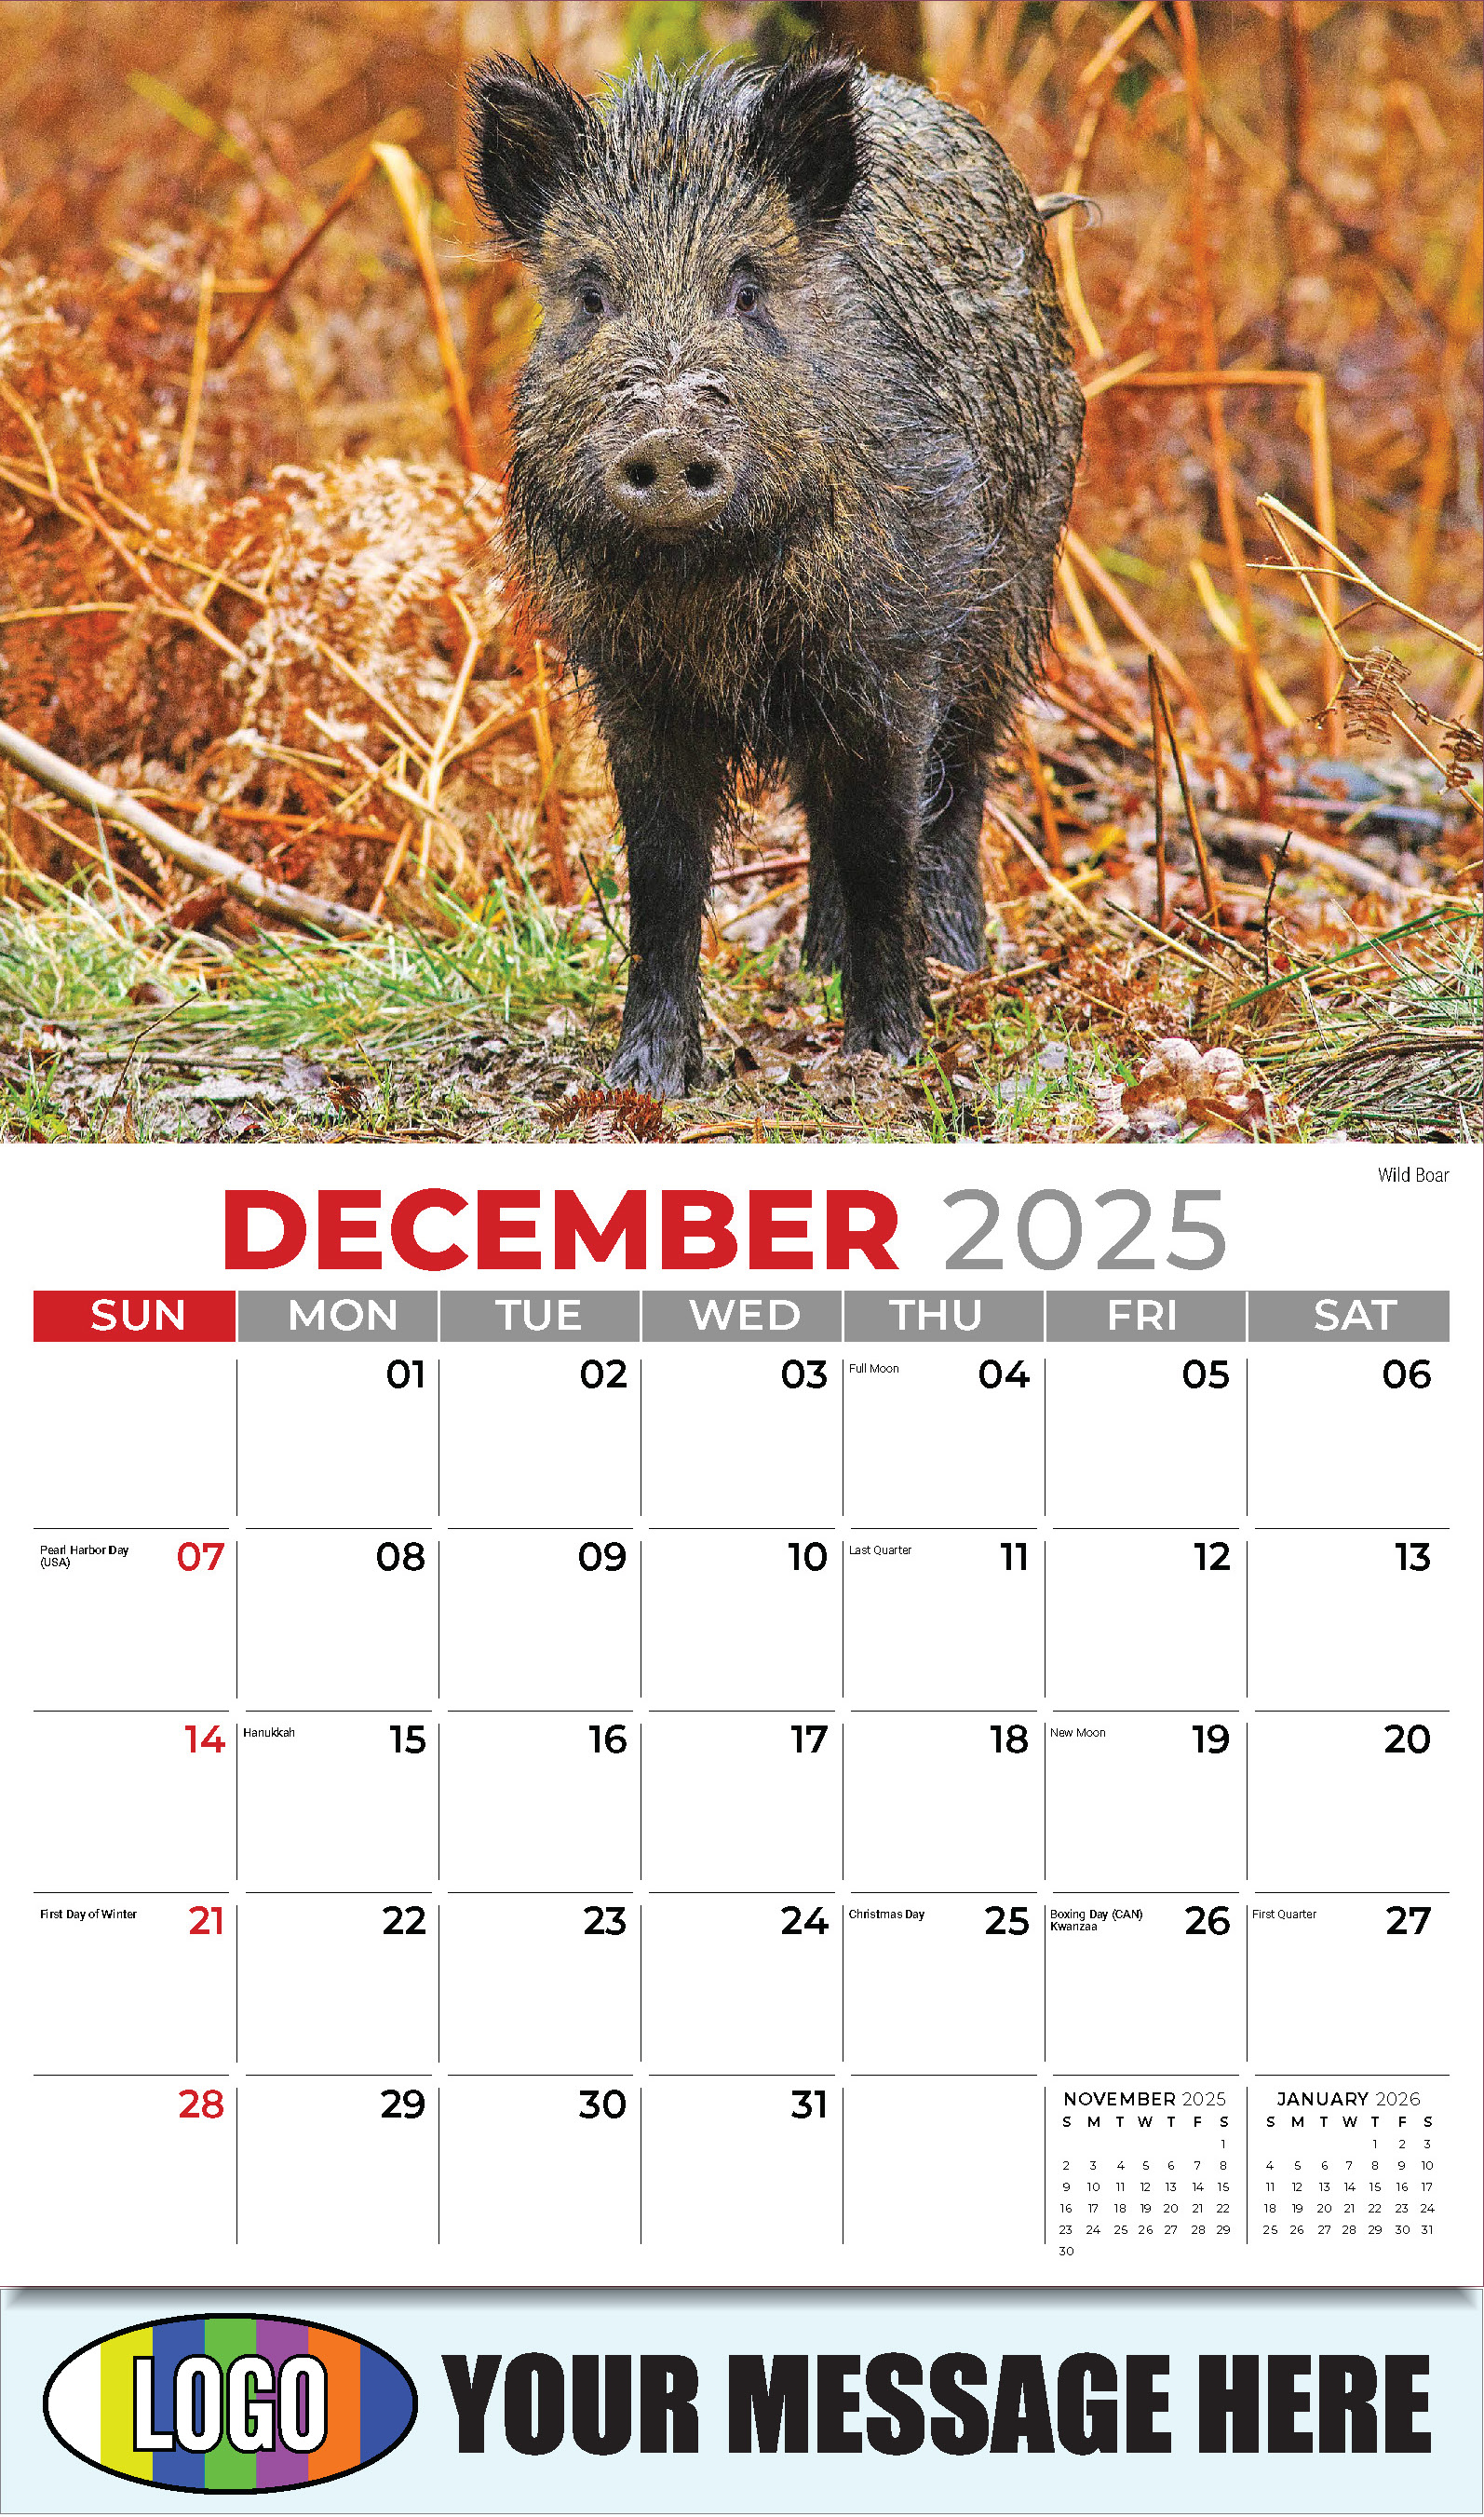 International Wildlife 2025 Business Advertising Wall Calendar - December